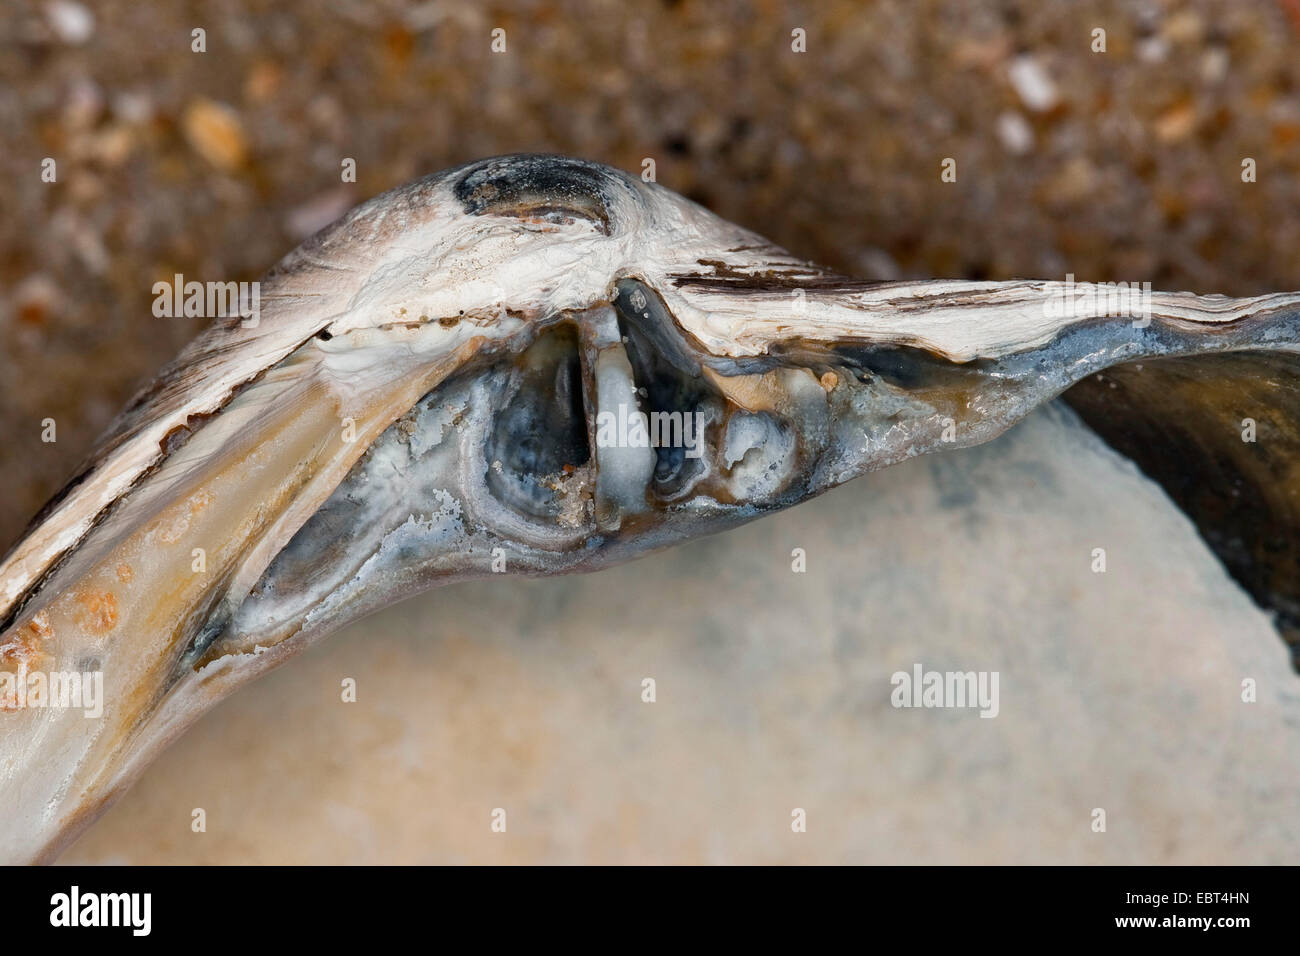 ocean quahog, Icelandic cyprine, mahogany clam, mahogany quahog, black quahog, black clam (Arctica islandica, Cyprina islandica), shells on the beach, hinge, Germany Stock Photo